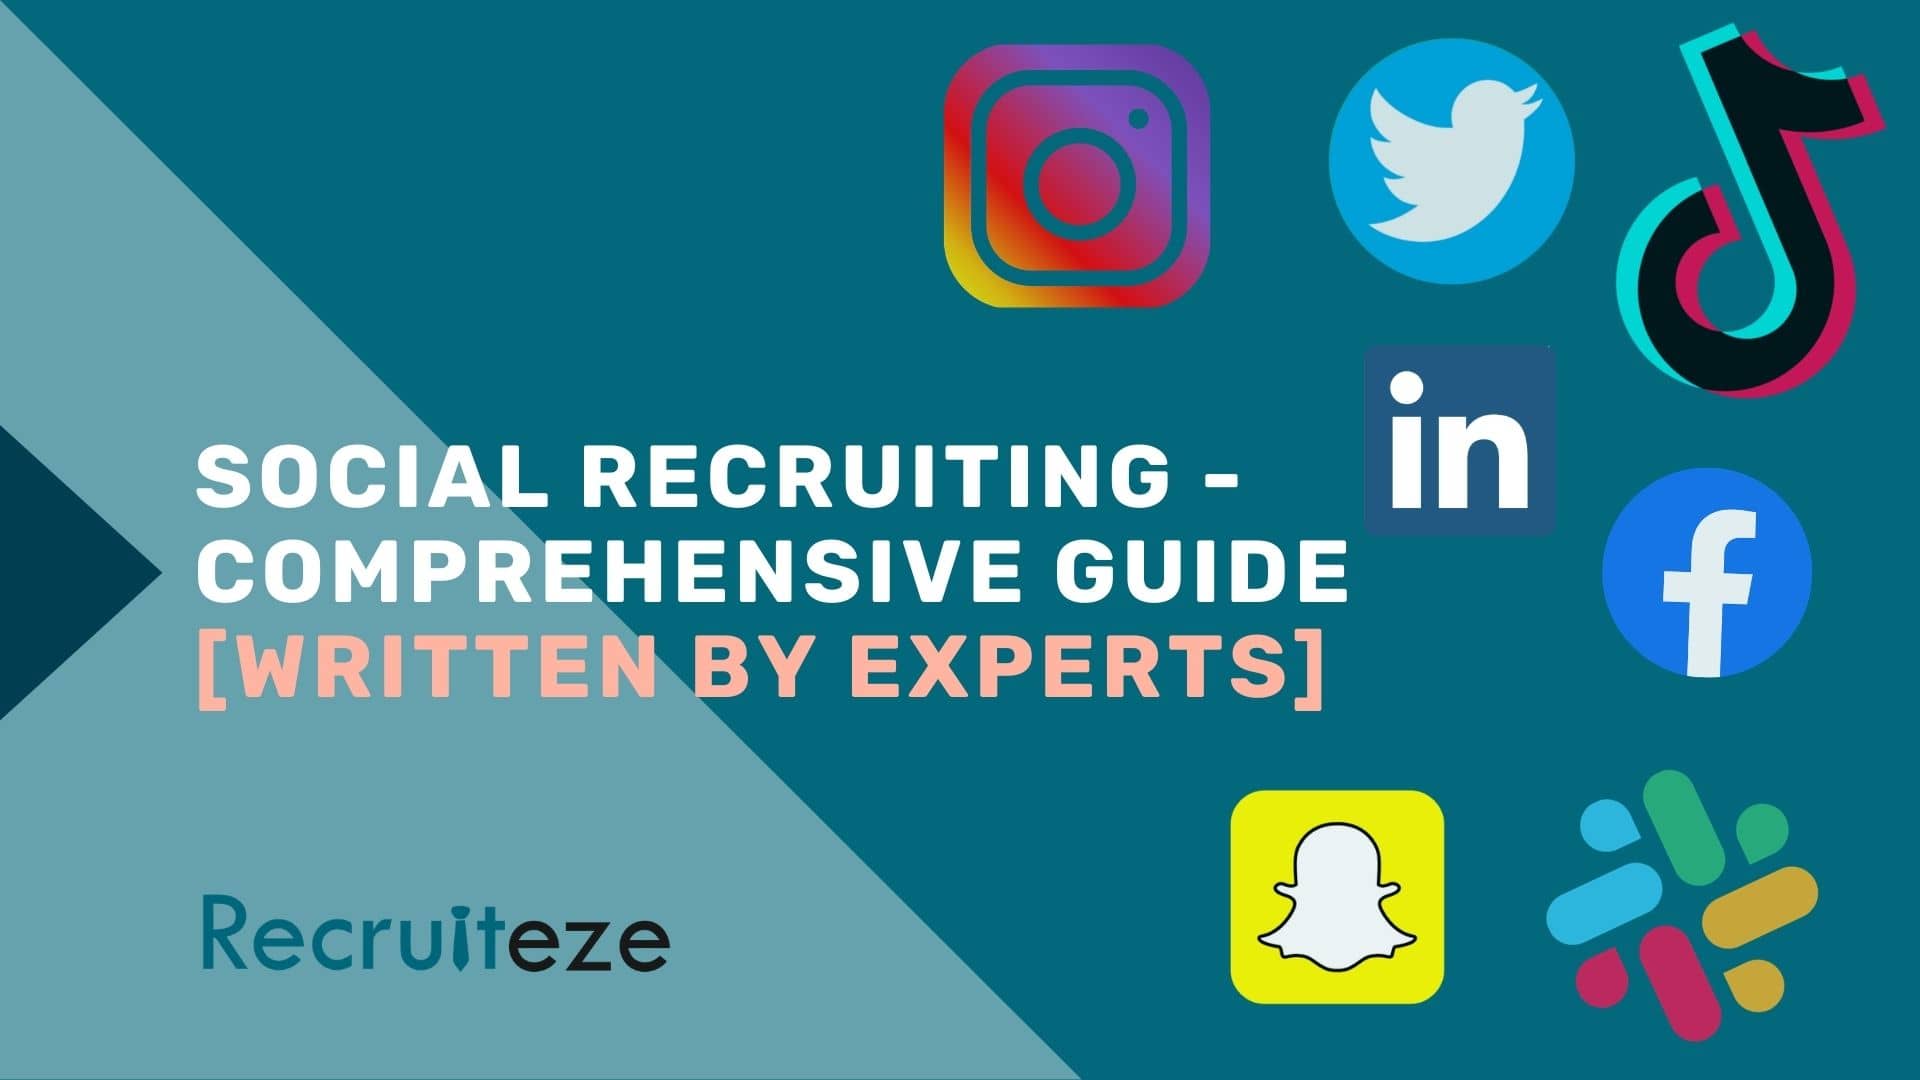 Social recruiting - comprehensive guide